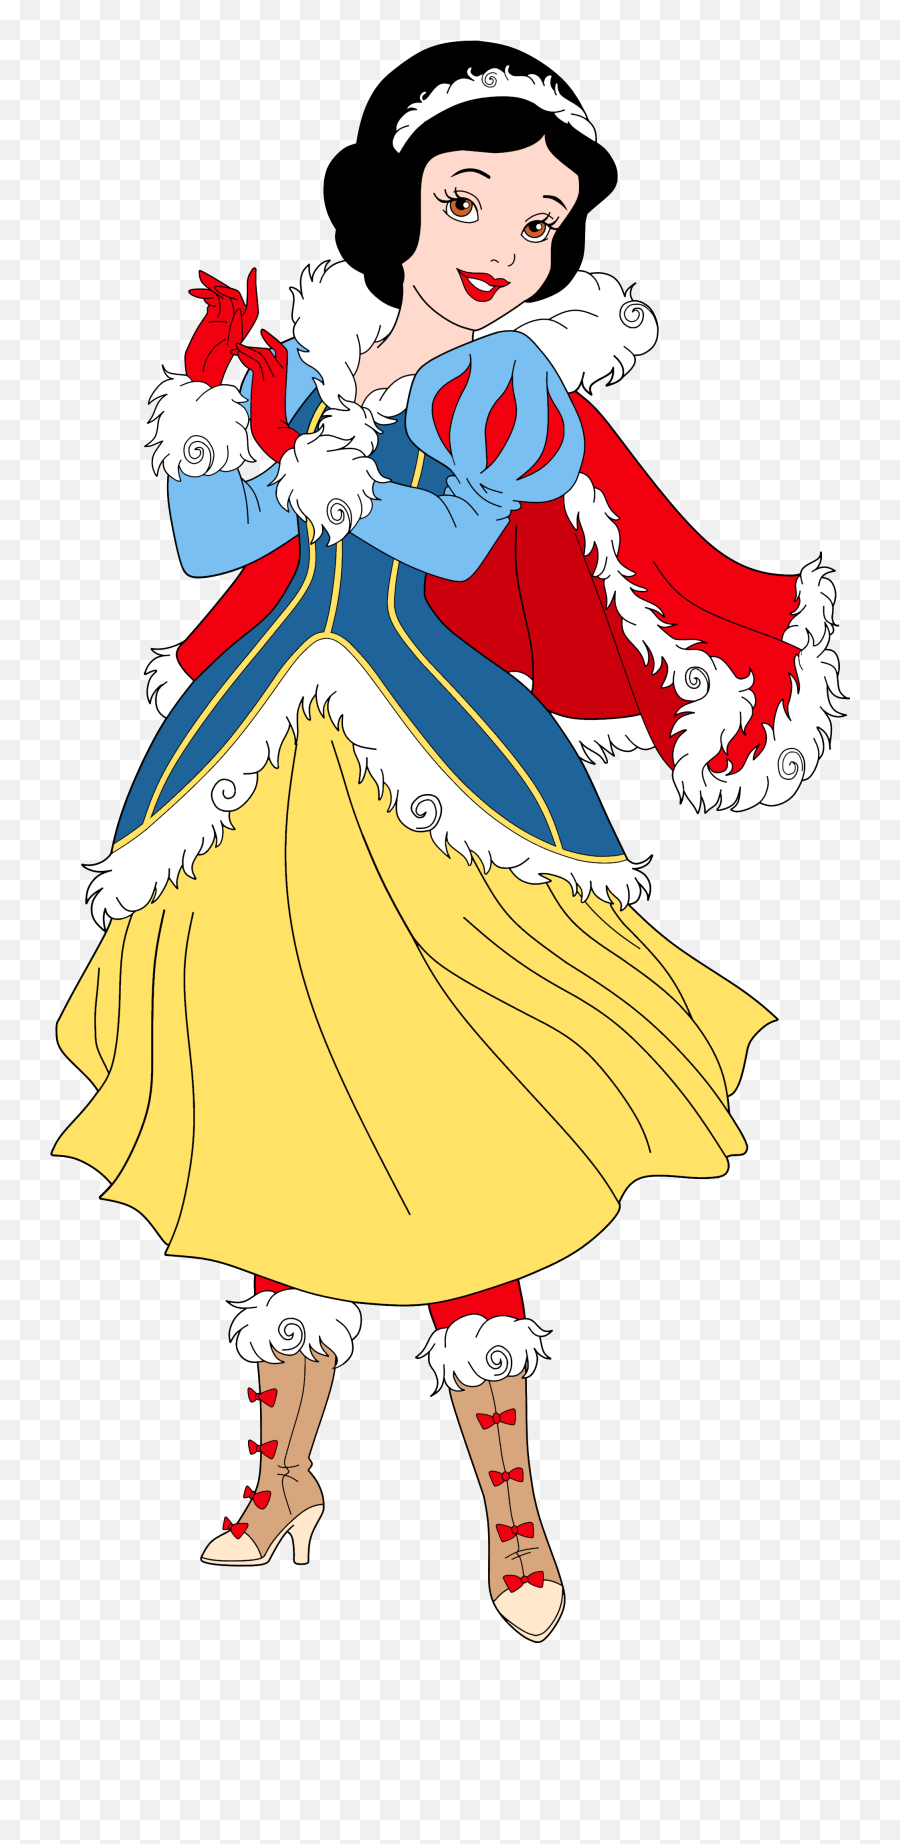 Download Hd Snow White And The Seven Dwarfs Images Snow Emoji,Seven Dwarfs Emoticons Facebook